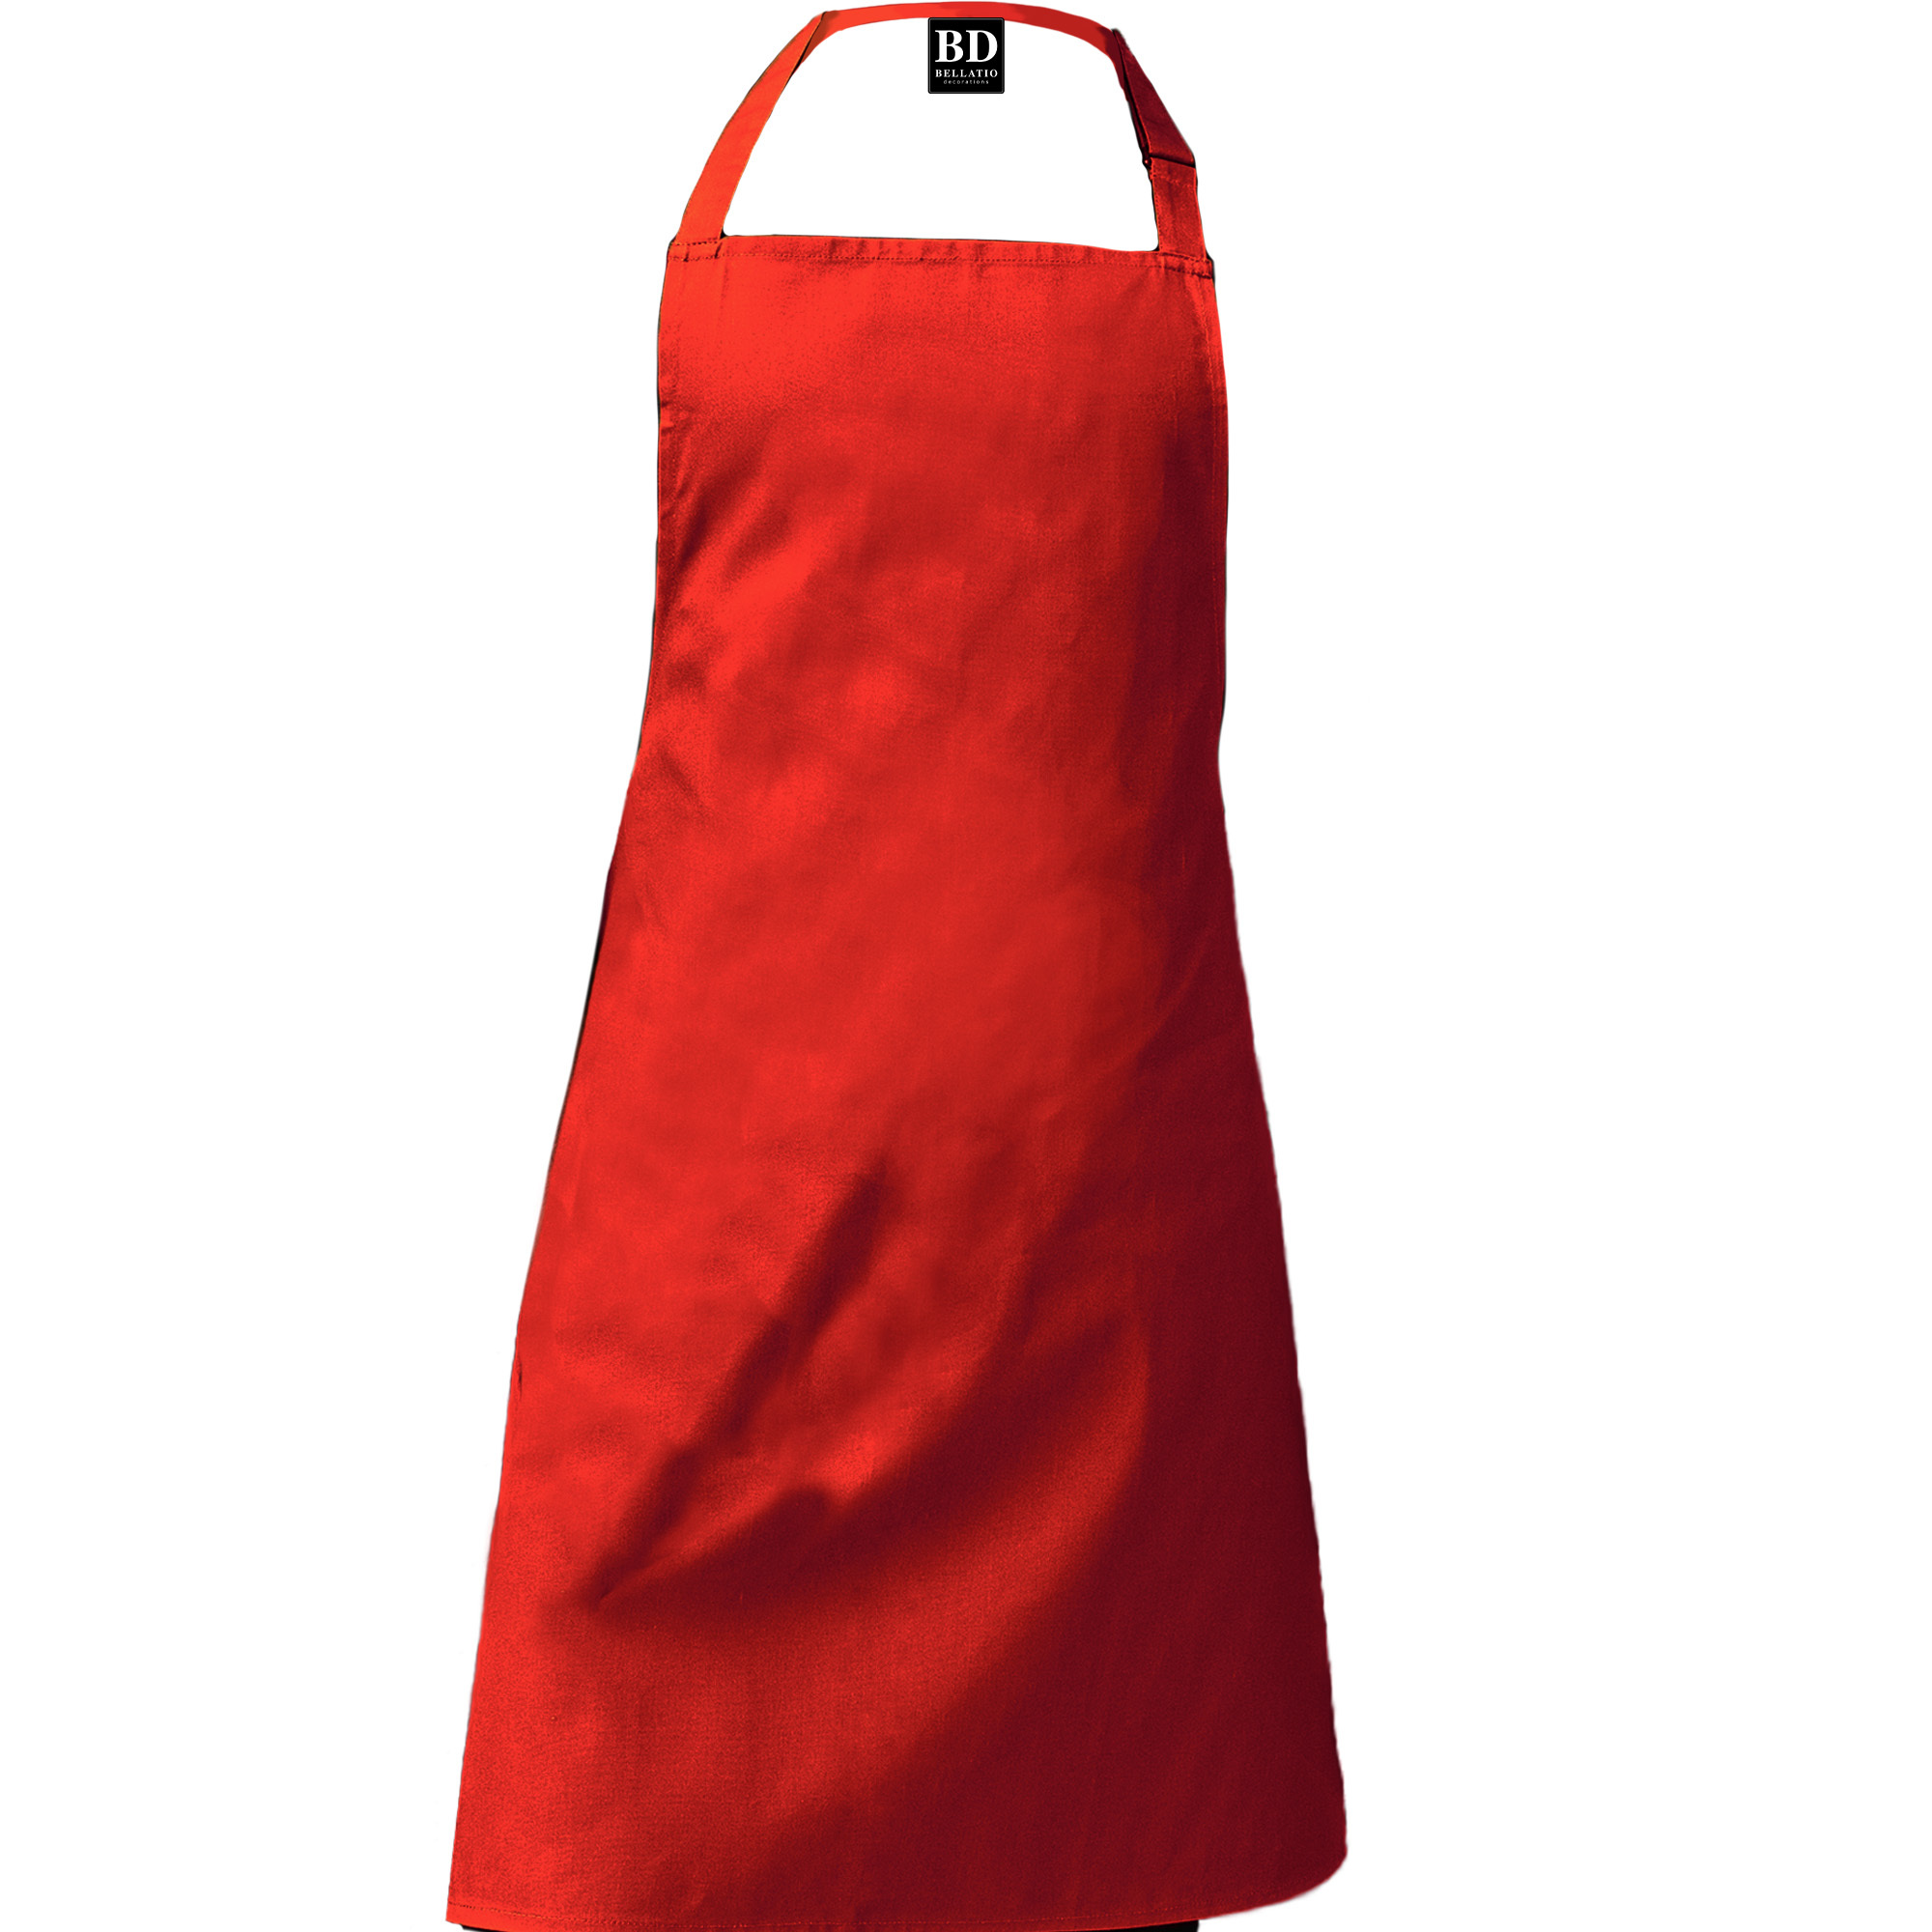 Keuken Prinses apron red for women